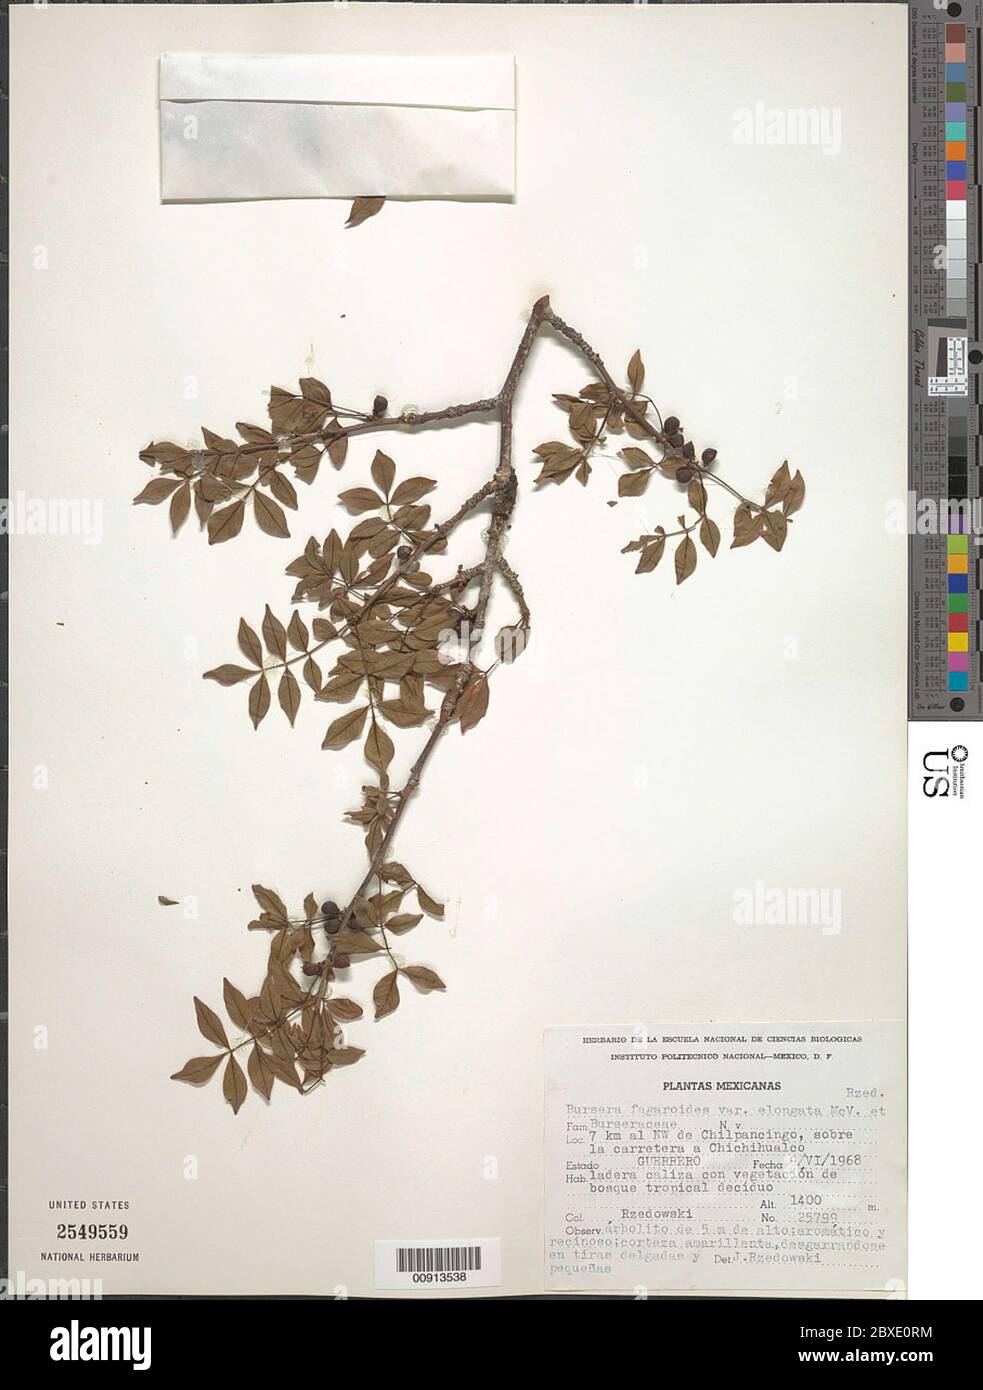 Bursera fagaroides var elongata Kunth Engl Bursera fagaroides var elongata Kunth Engl. Stock Photo